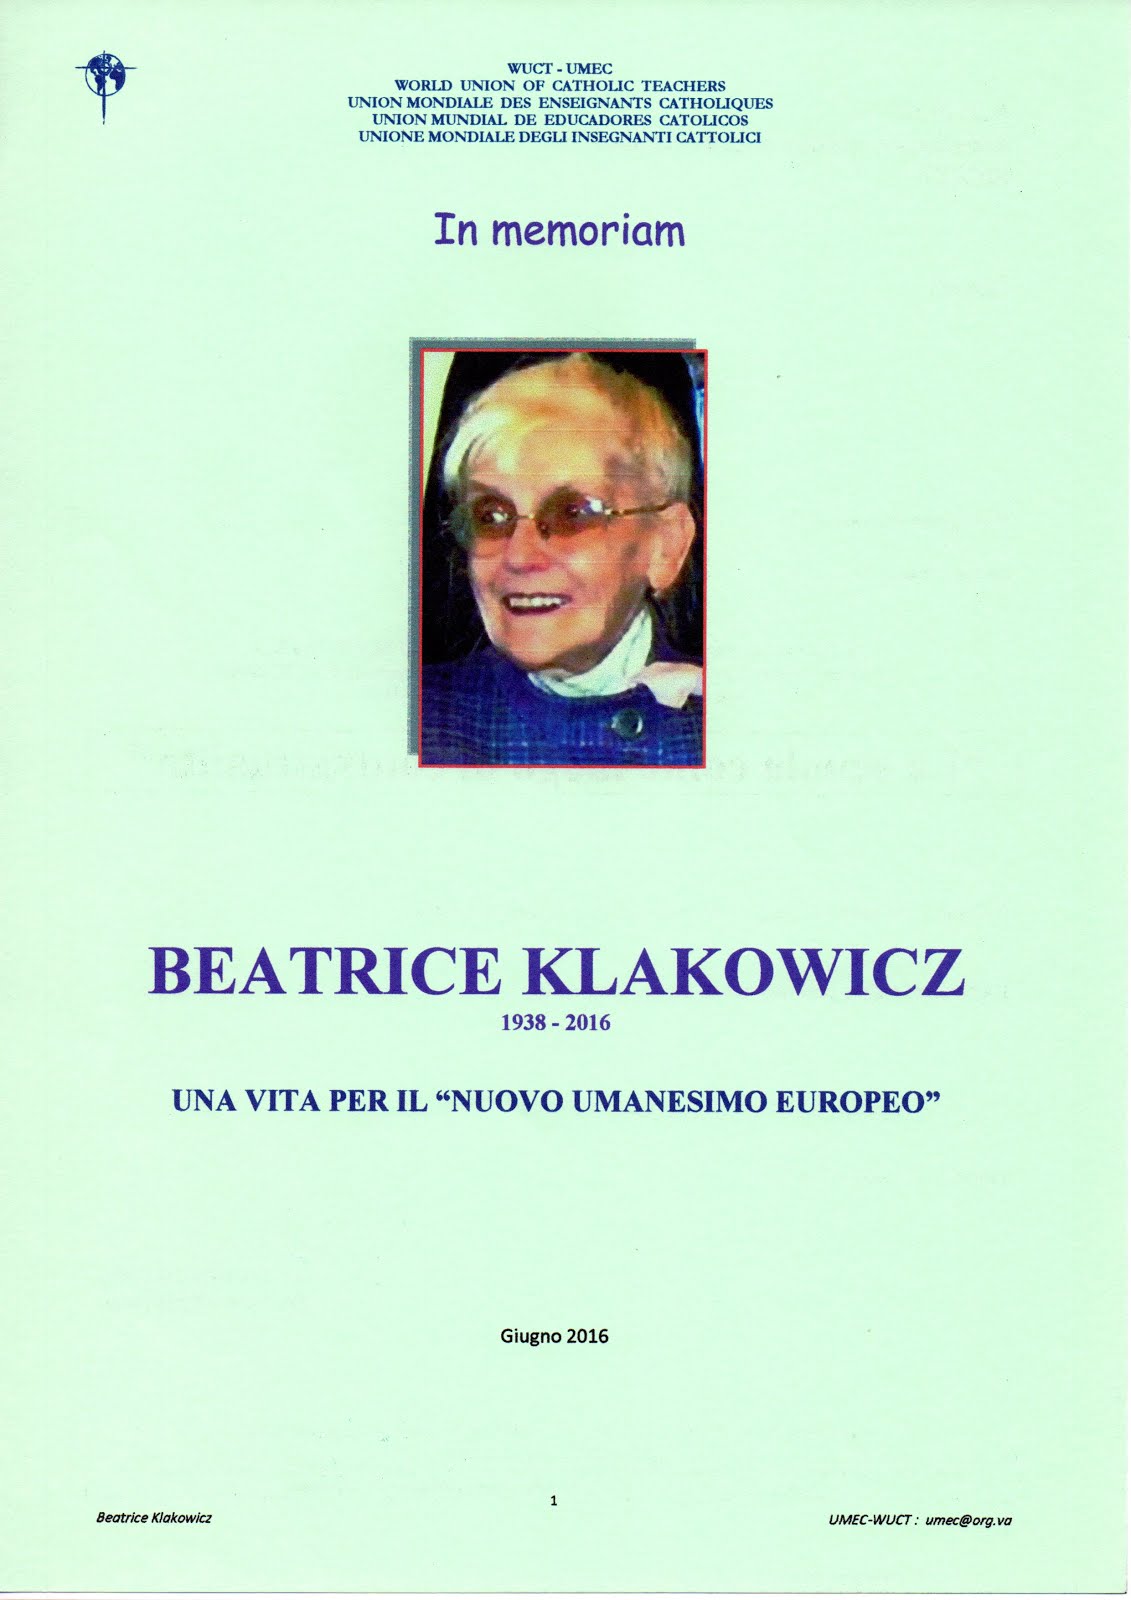 BEATRICE KLAKOWICZ - in memoriam